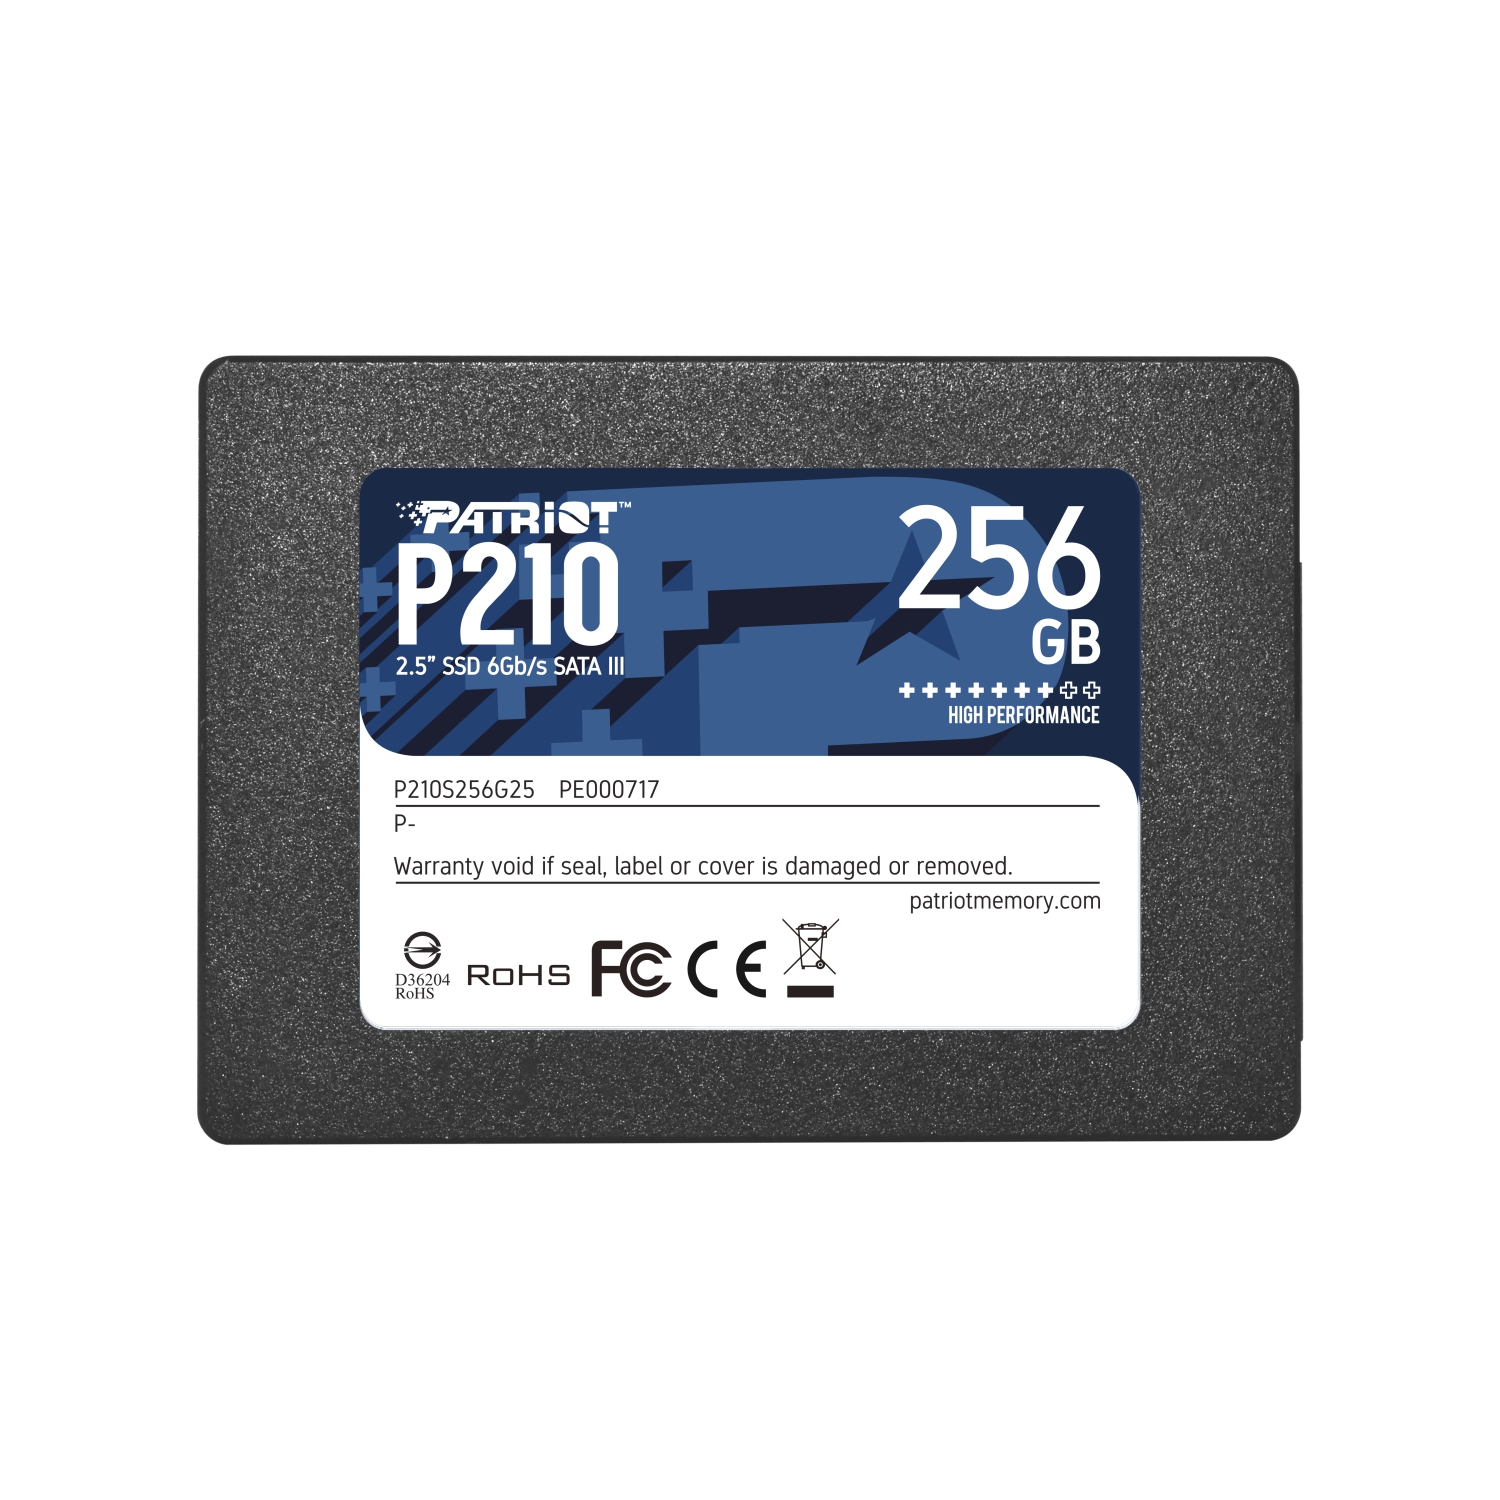 Patriot P210 256GB Internal SSD - SATA 3 2.5" - Solid State Drive - P210S256G25